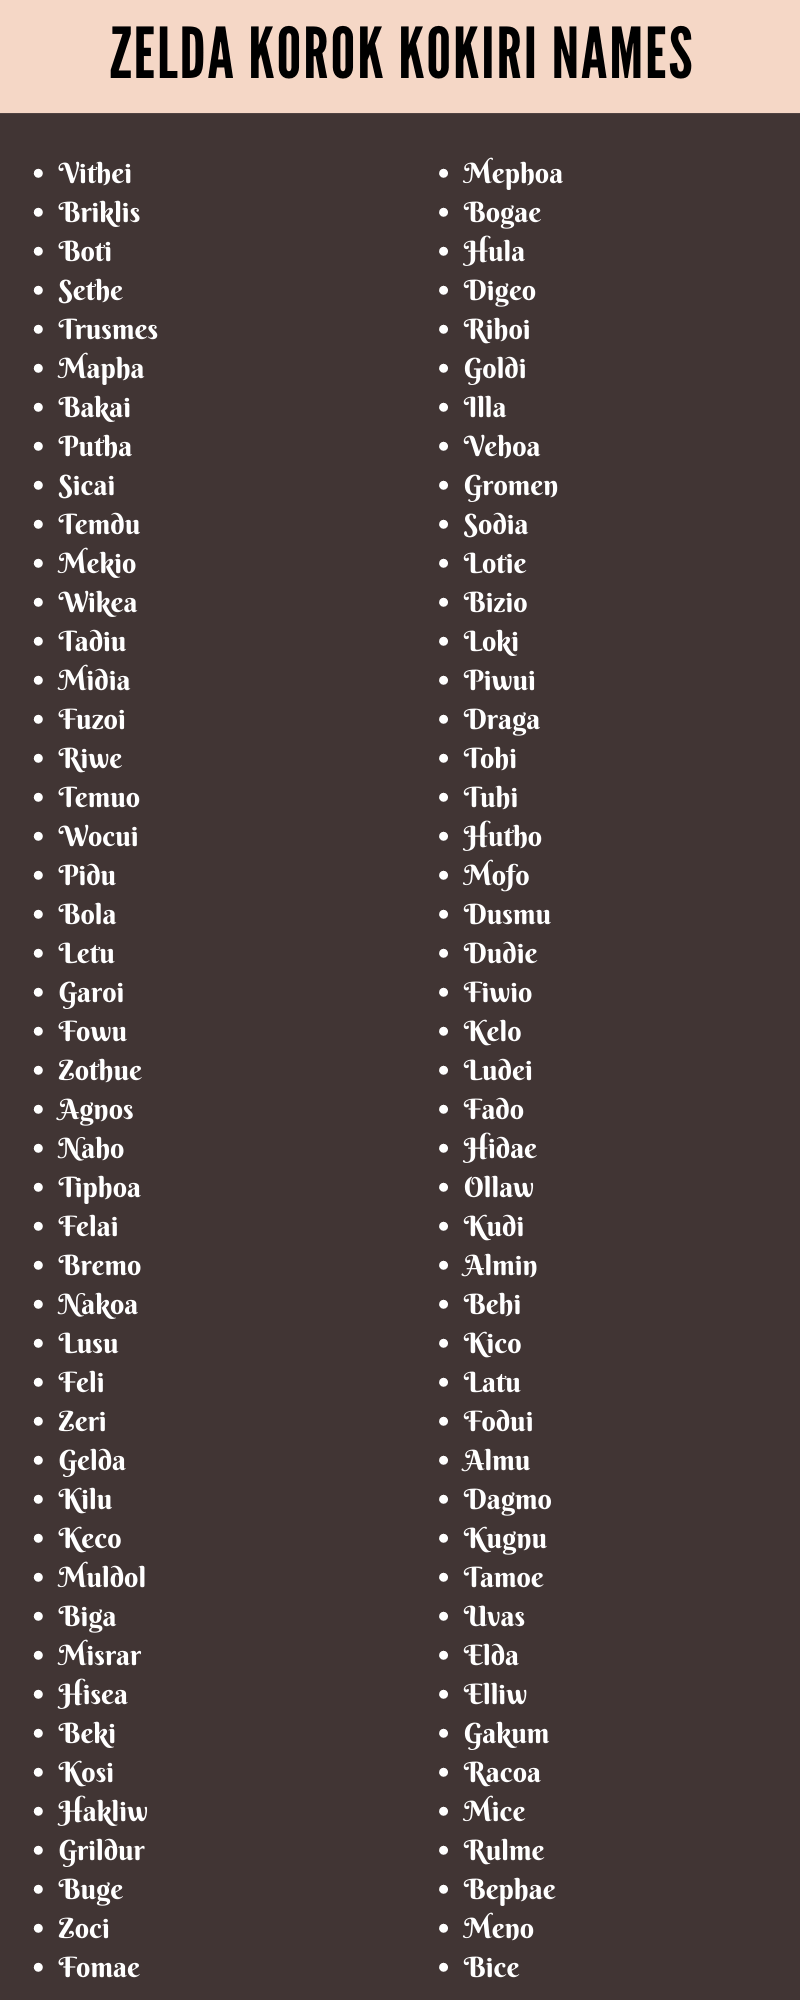 Zelda Korok Kokiri Names